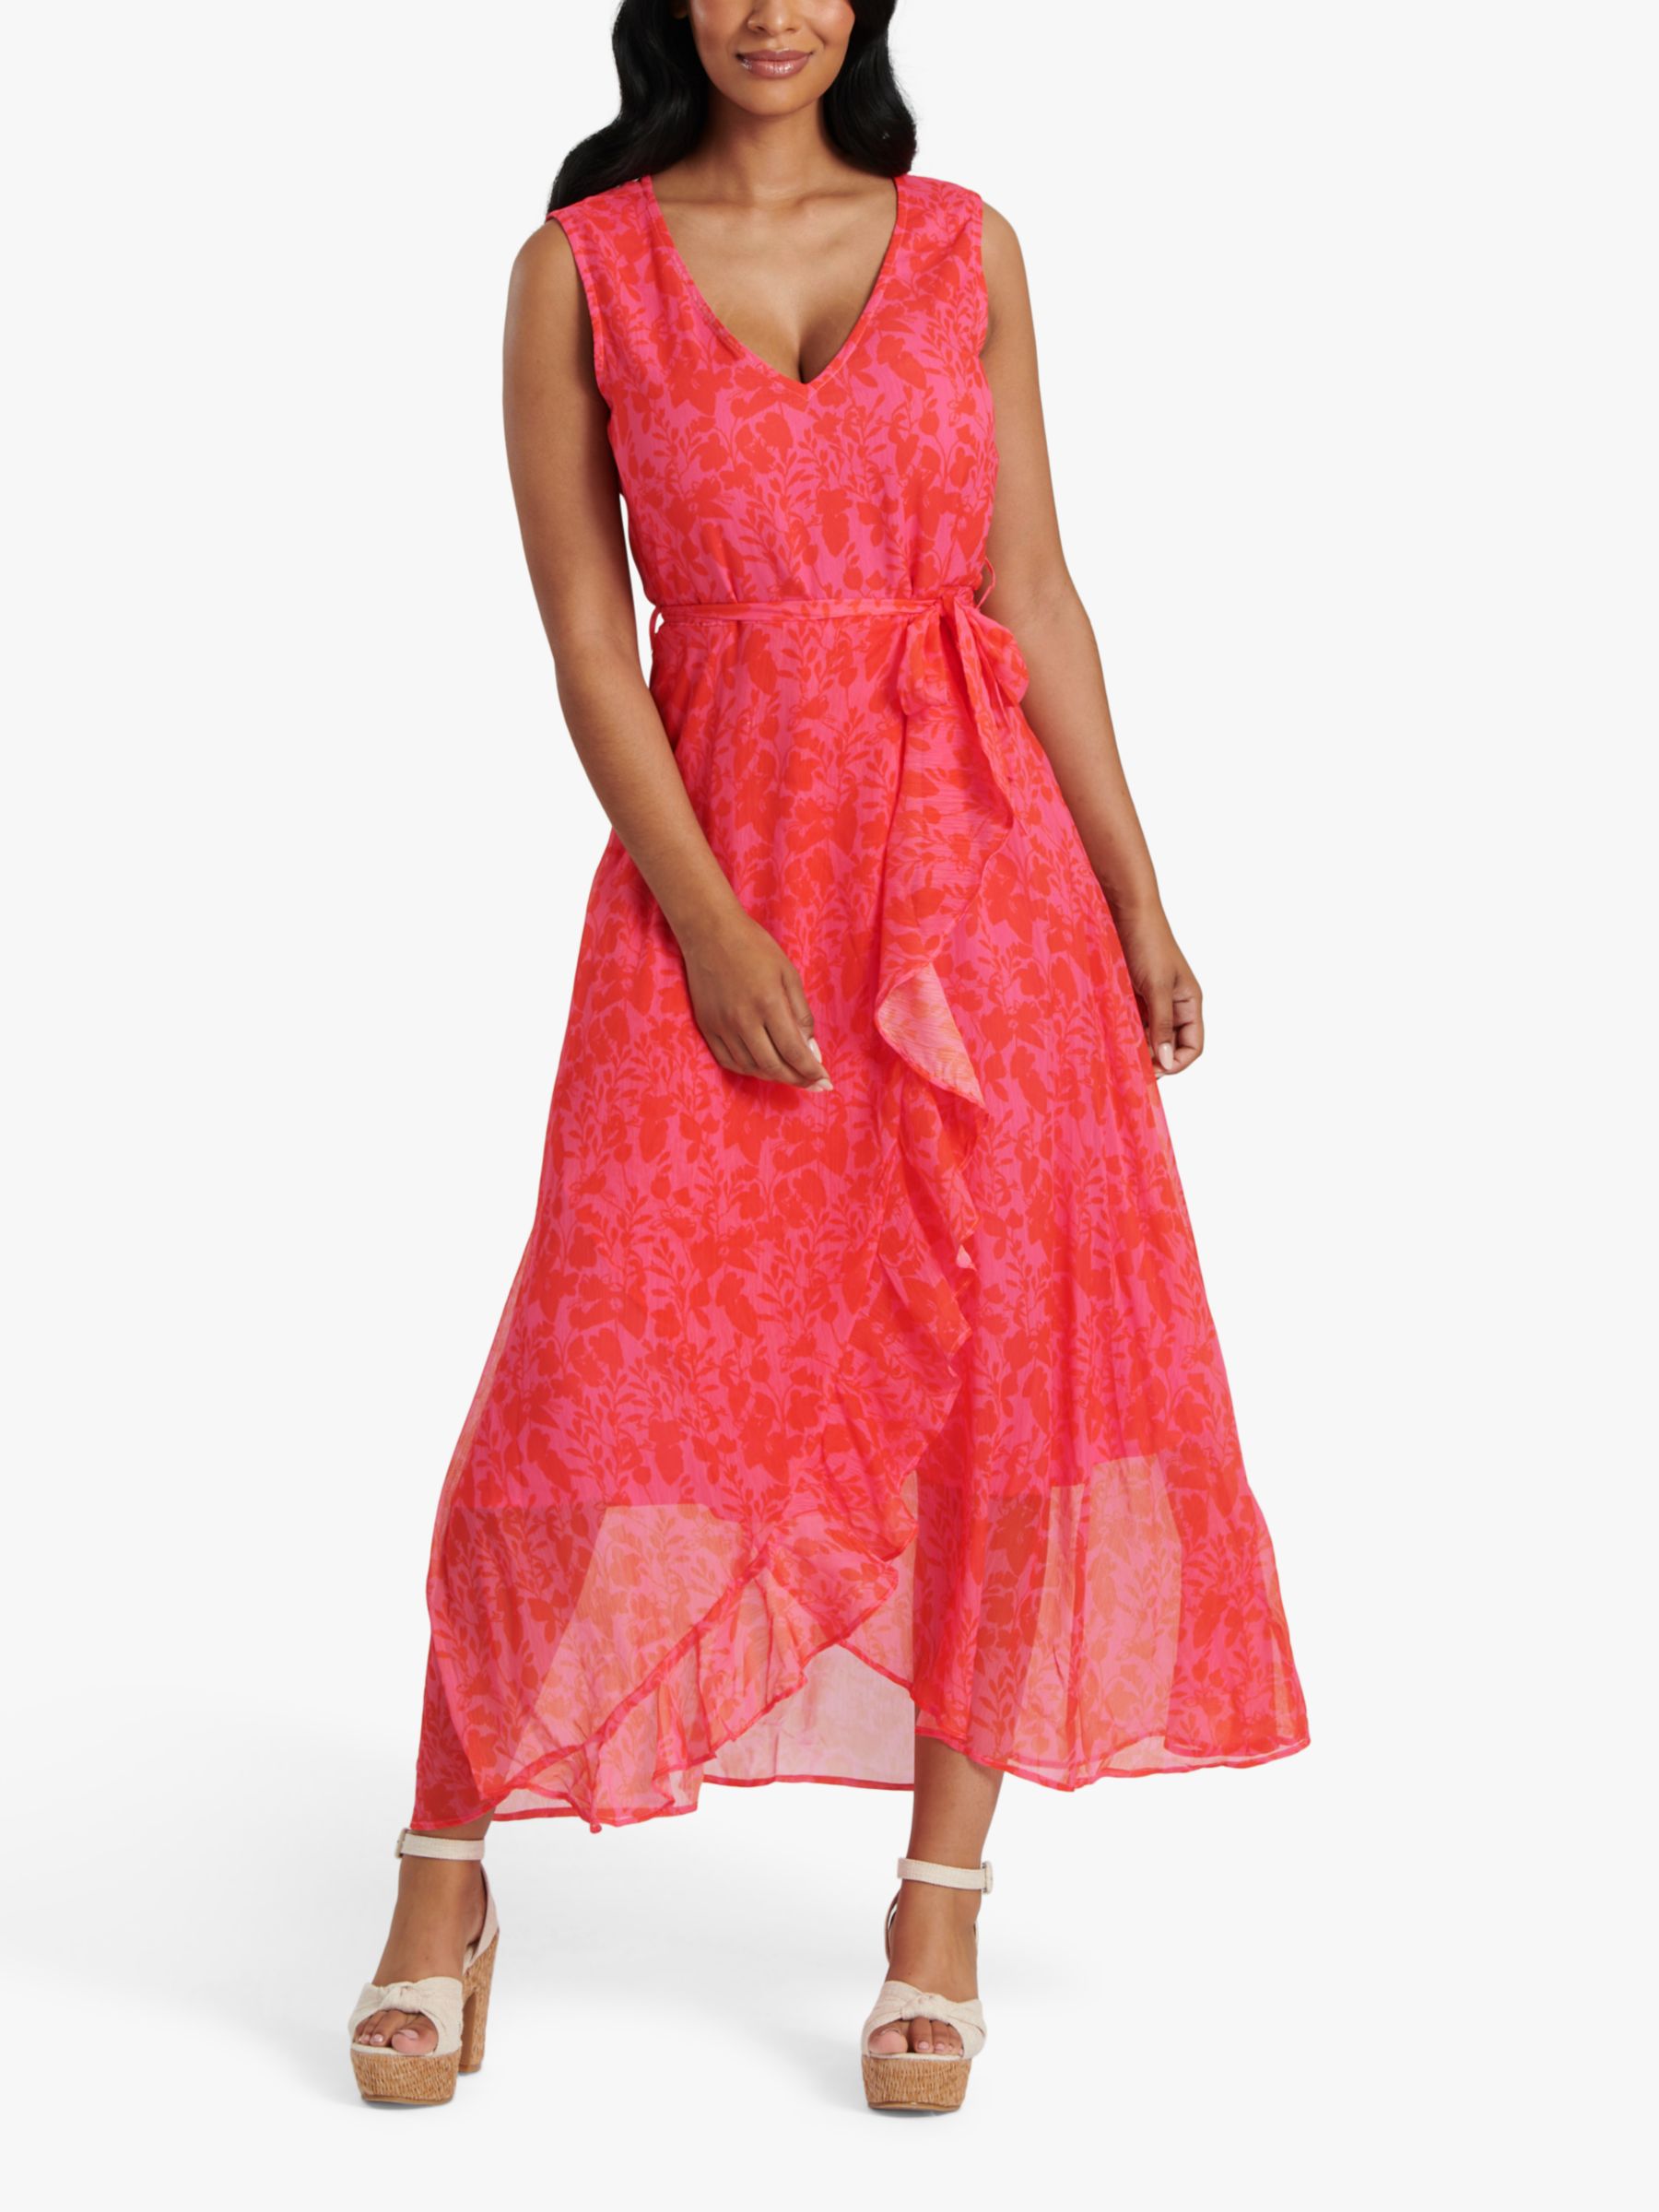 South Beach Chiffon V-Neck Frill Wrap Midi Dress, Red/Pink, 10